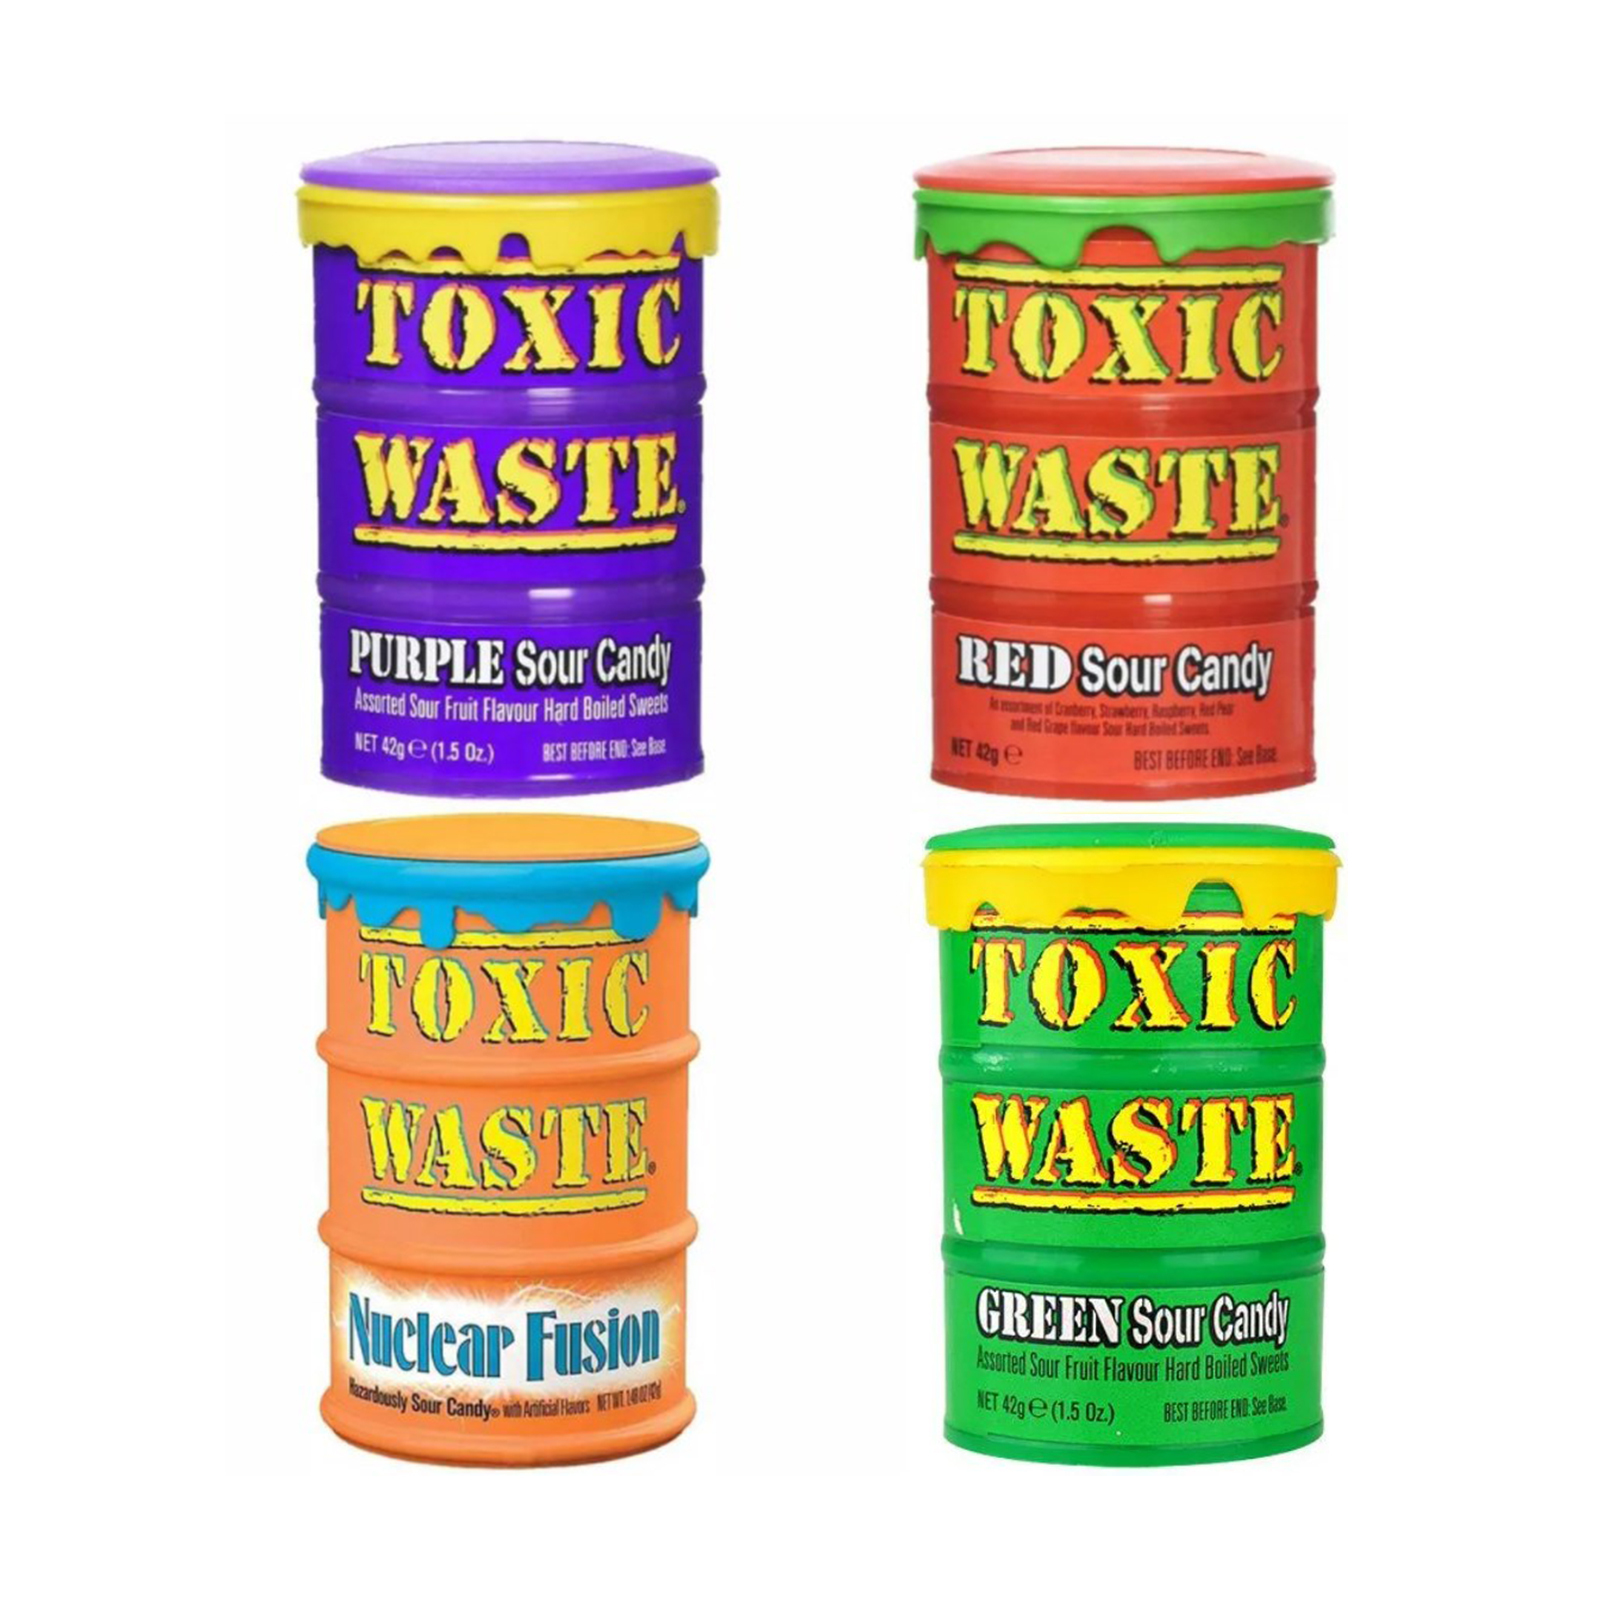 Токсик вейст. Леденцы Toxic waste. Токсик Вейст вкусы. Кислые конфеты Toxic waste. Леденцы Toxic waste Purple 42гр.